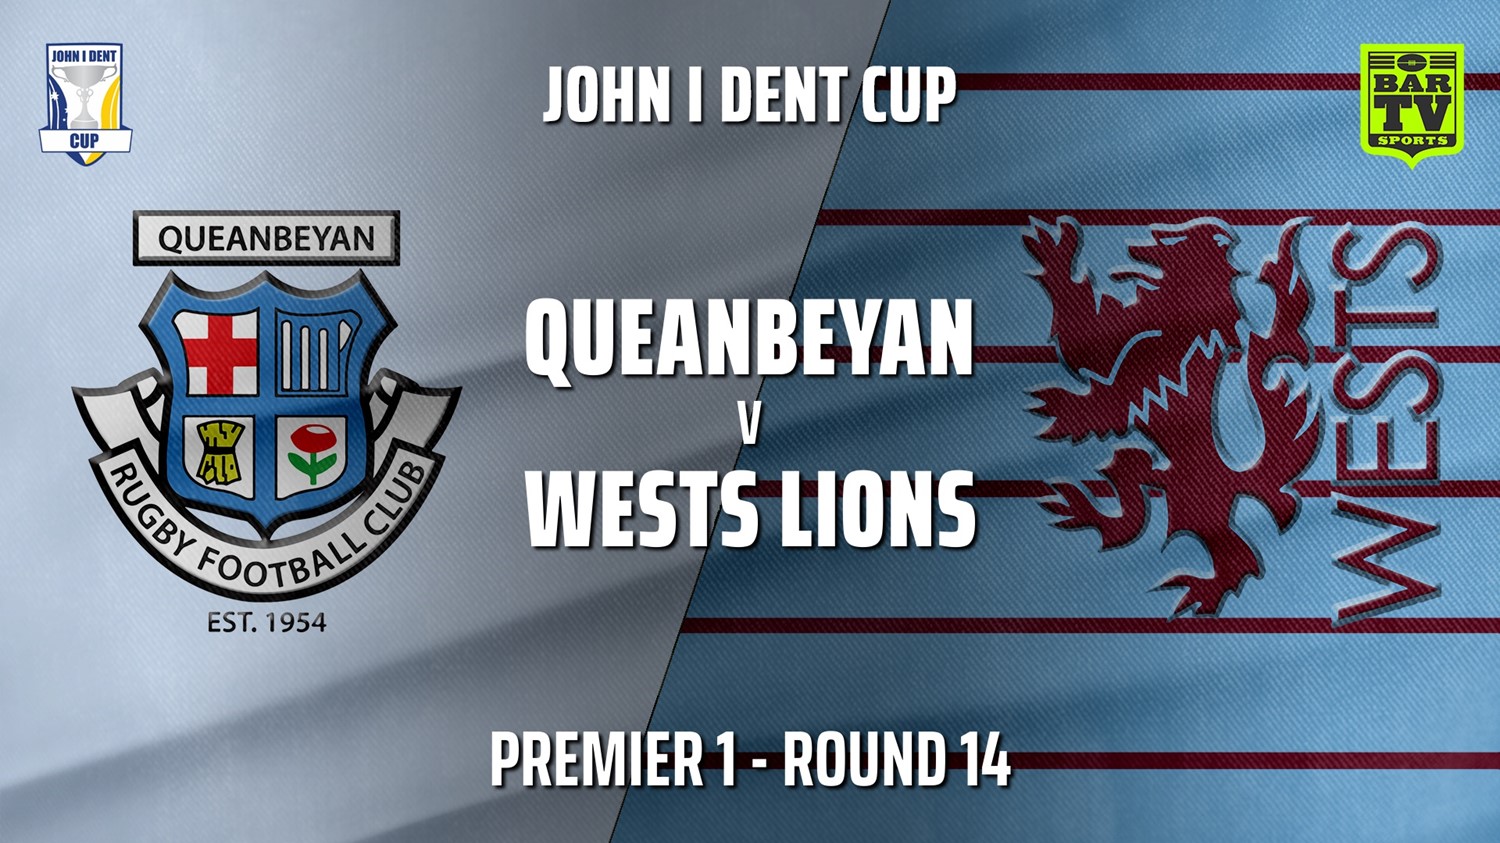 210807-John I Dent (ACT) Round 14 - Premier 1 - Queanbeyan Whites v Wests Lions Slate Image